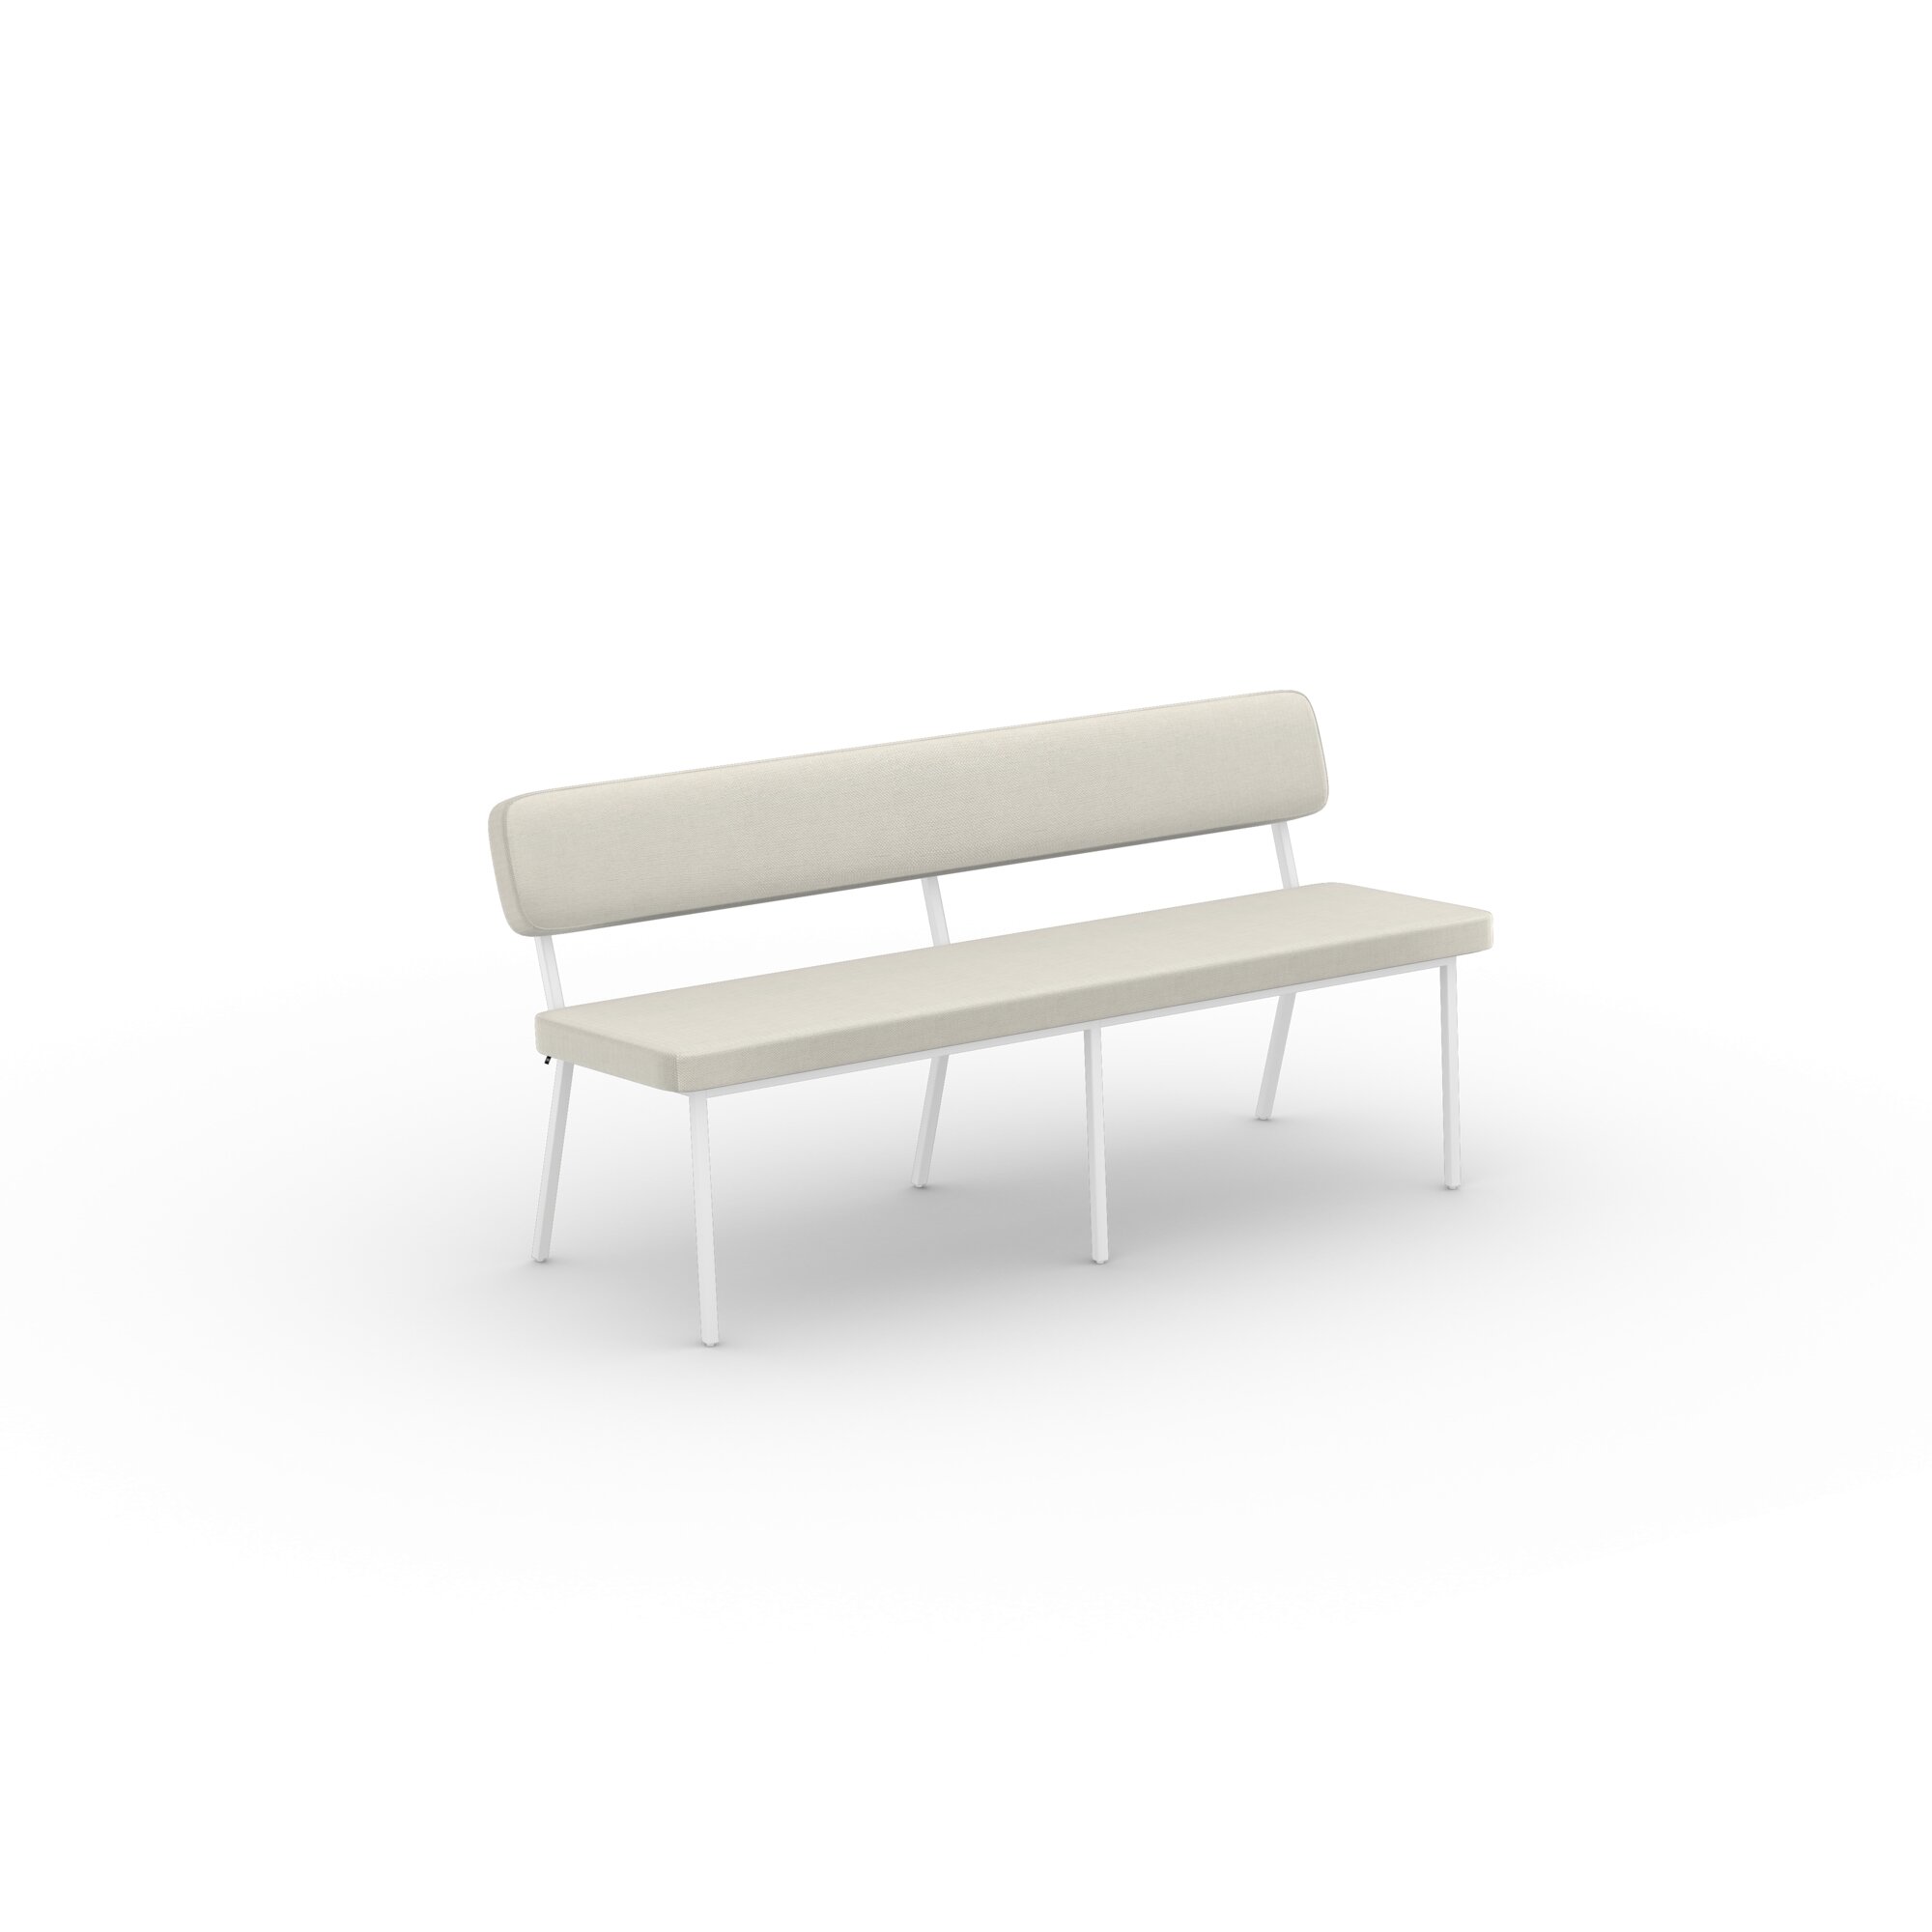 Design modern dining chair | Coode dining bench 160  calvados multibeige9995 | Studio HENK| 